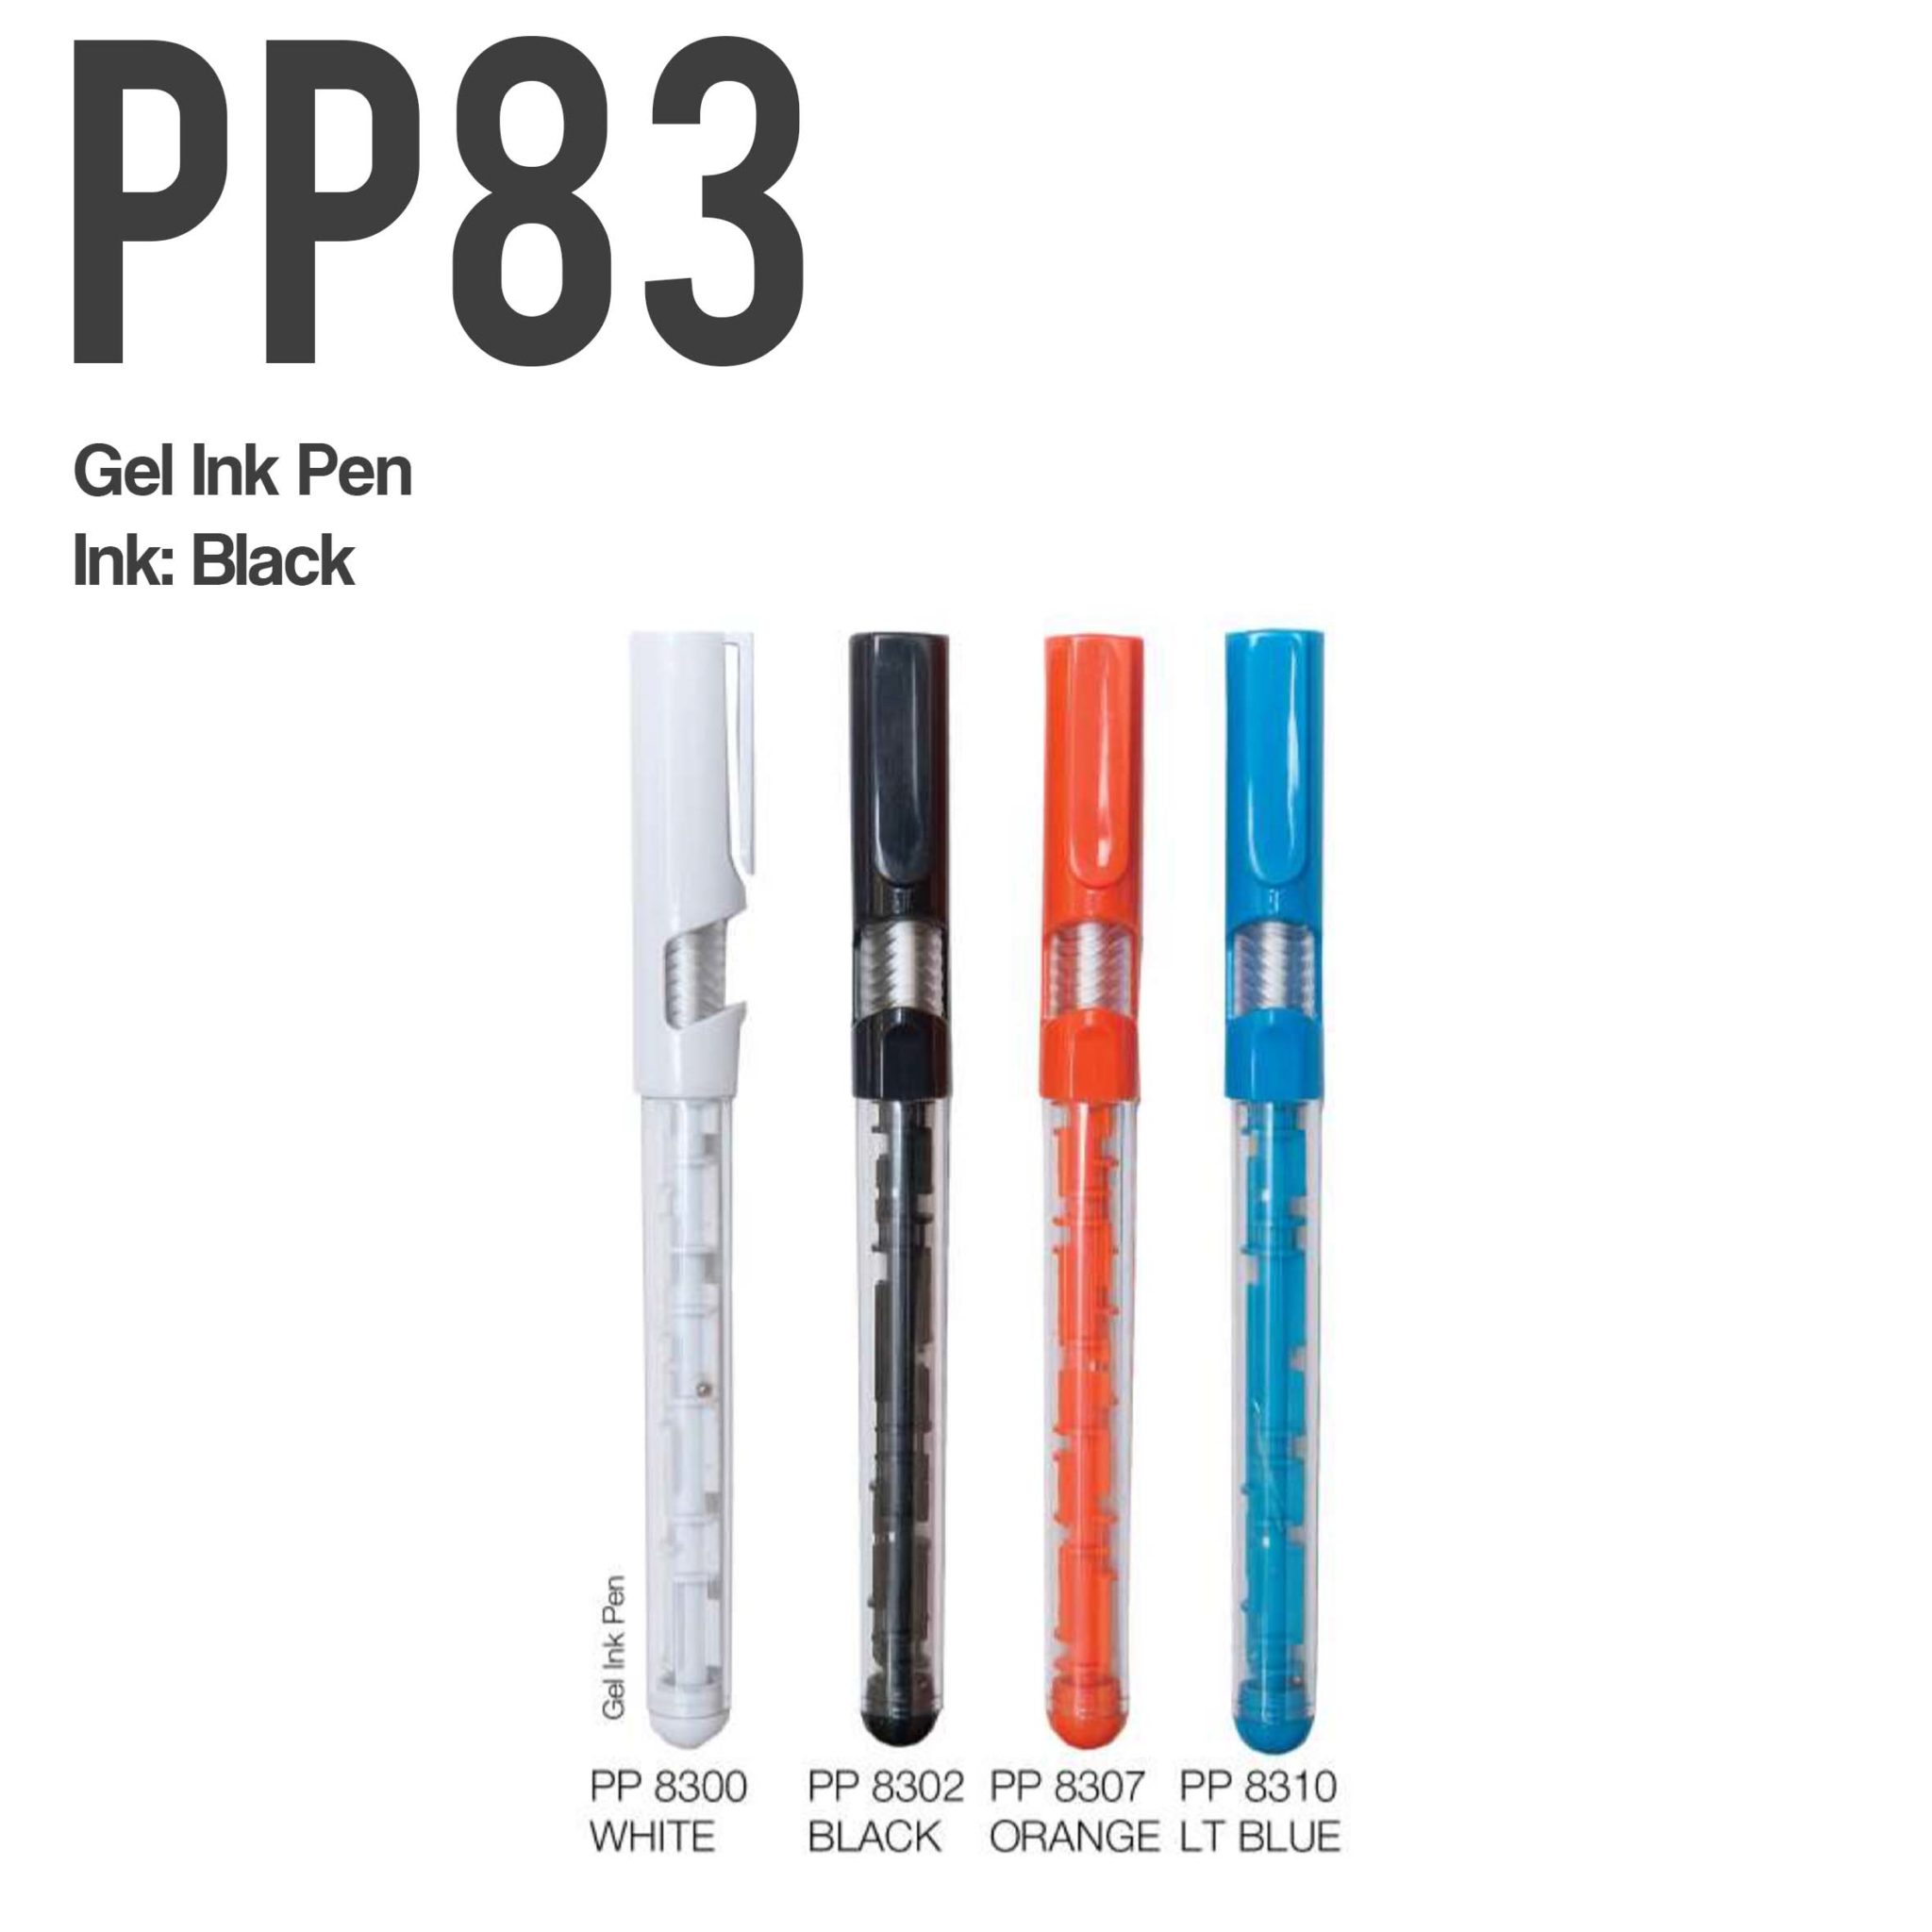 PP83 gel ink plastic pen scaled